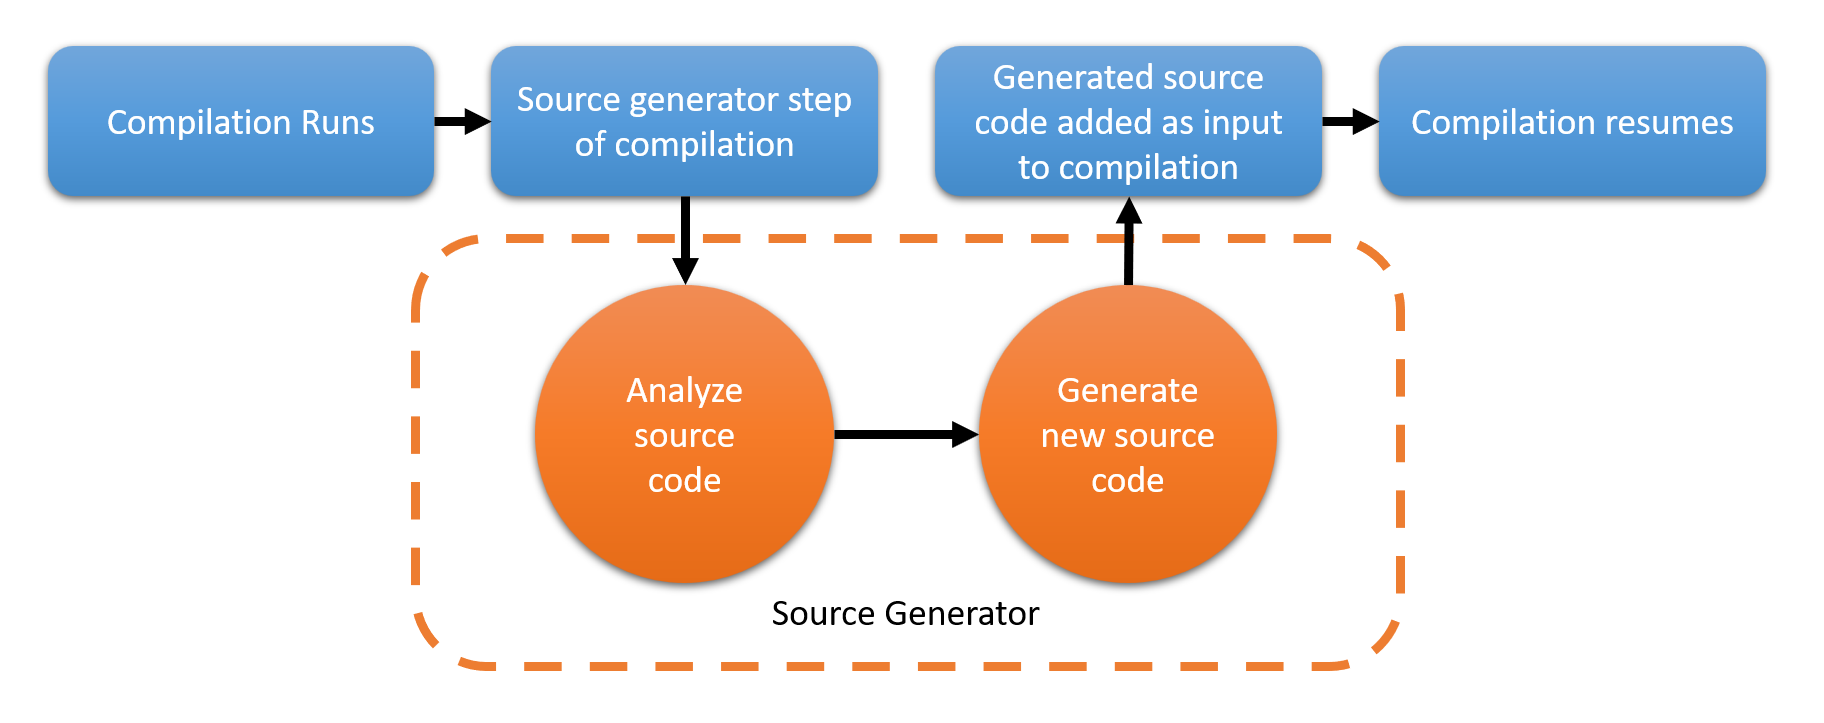 Source Generator